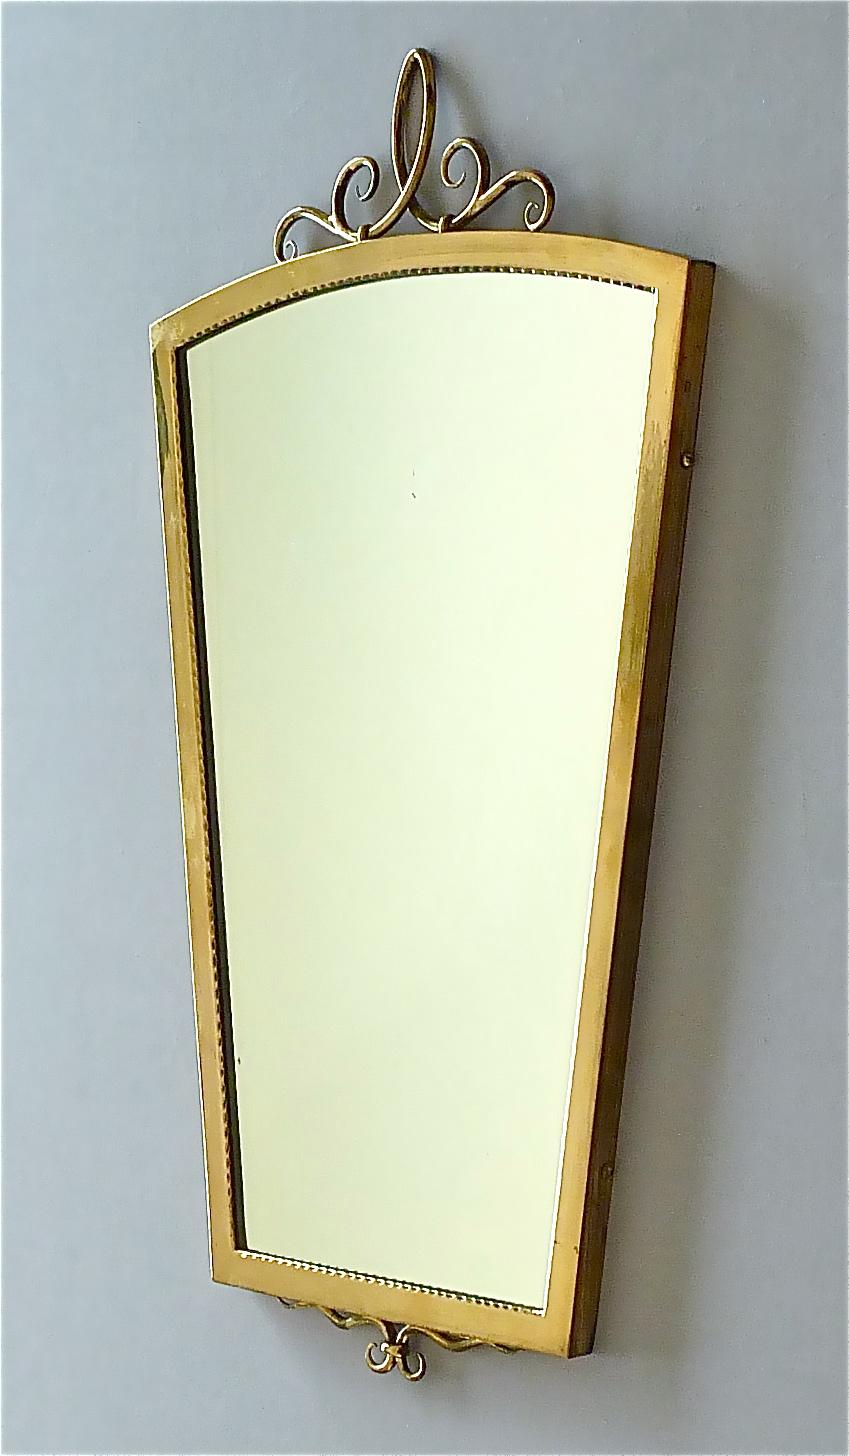 Rare Midcentury Gio Ponti attribution Italian Wall Mirror Gilt Brass Glass 1950s For Sale 9